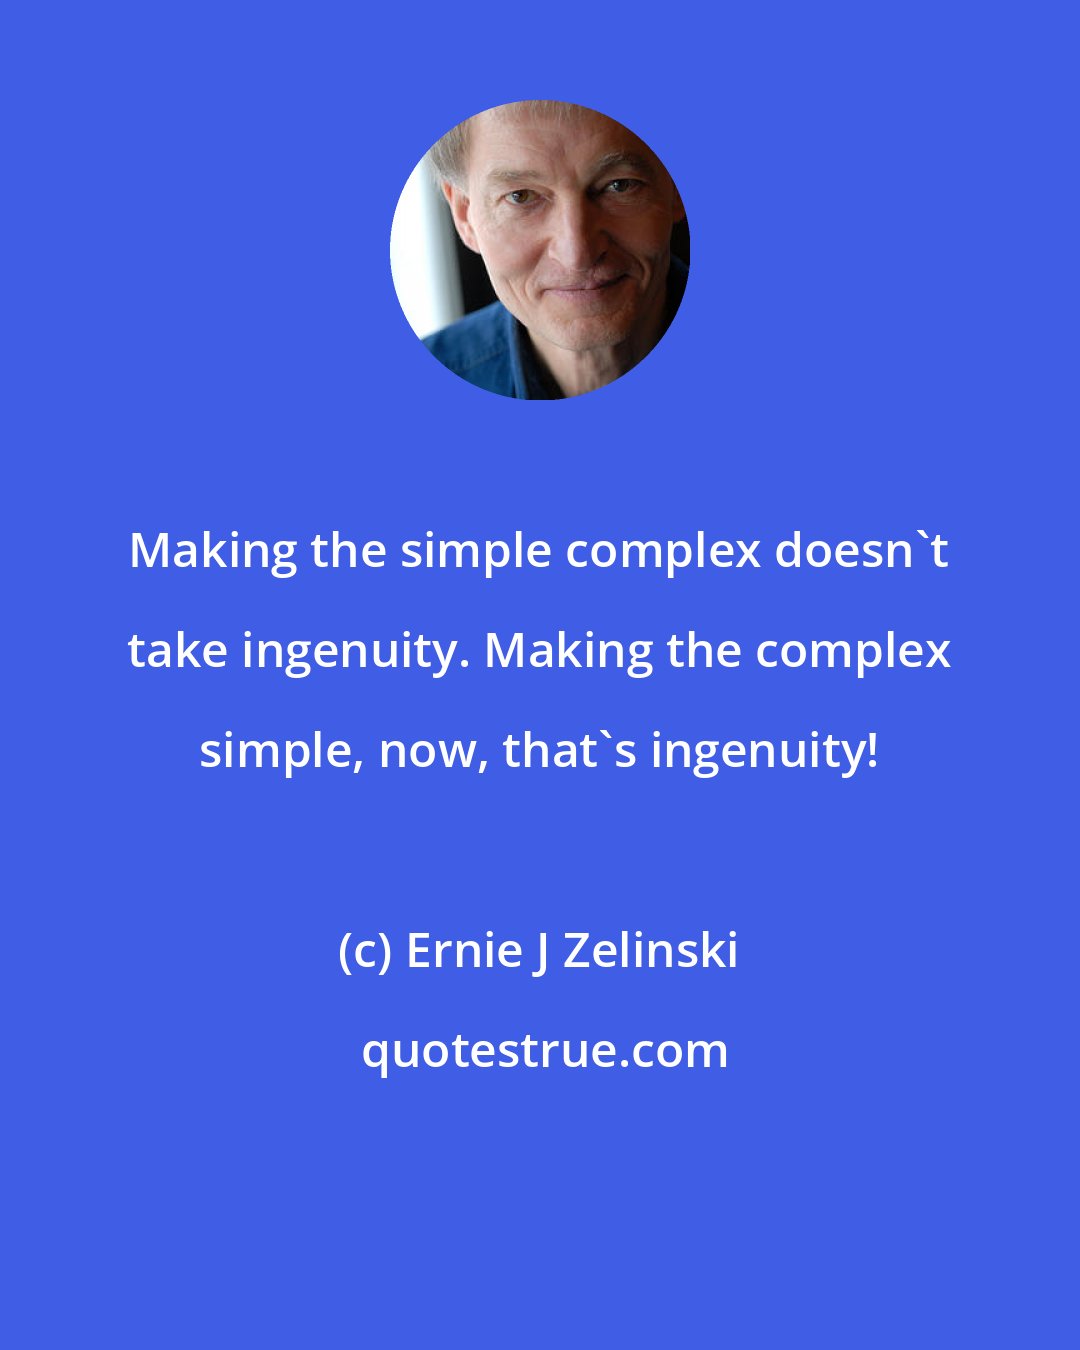 Ernie J Zelinski: Making the simple complex doesn't take ingenuity. Making the complex simple, now, that's ingenuity!